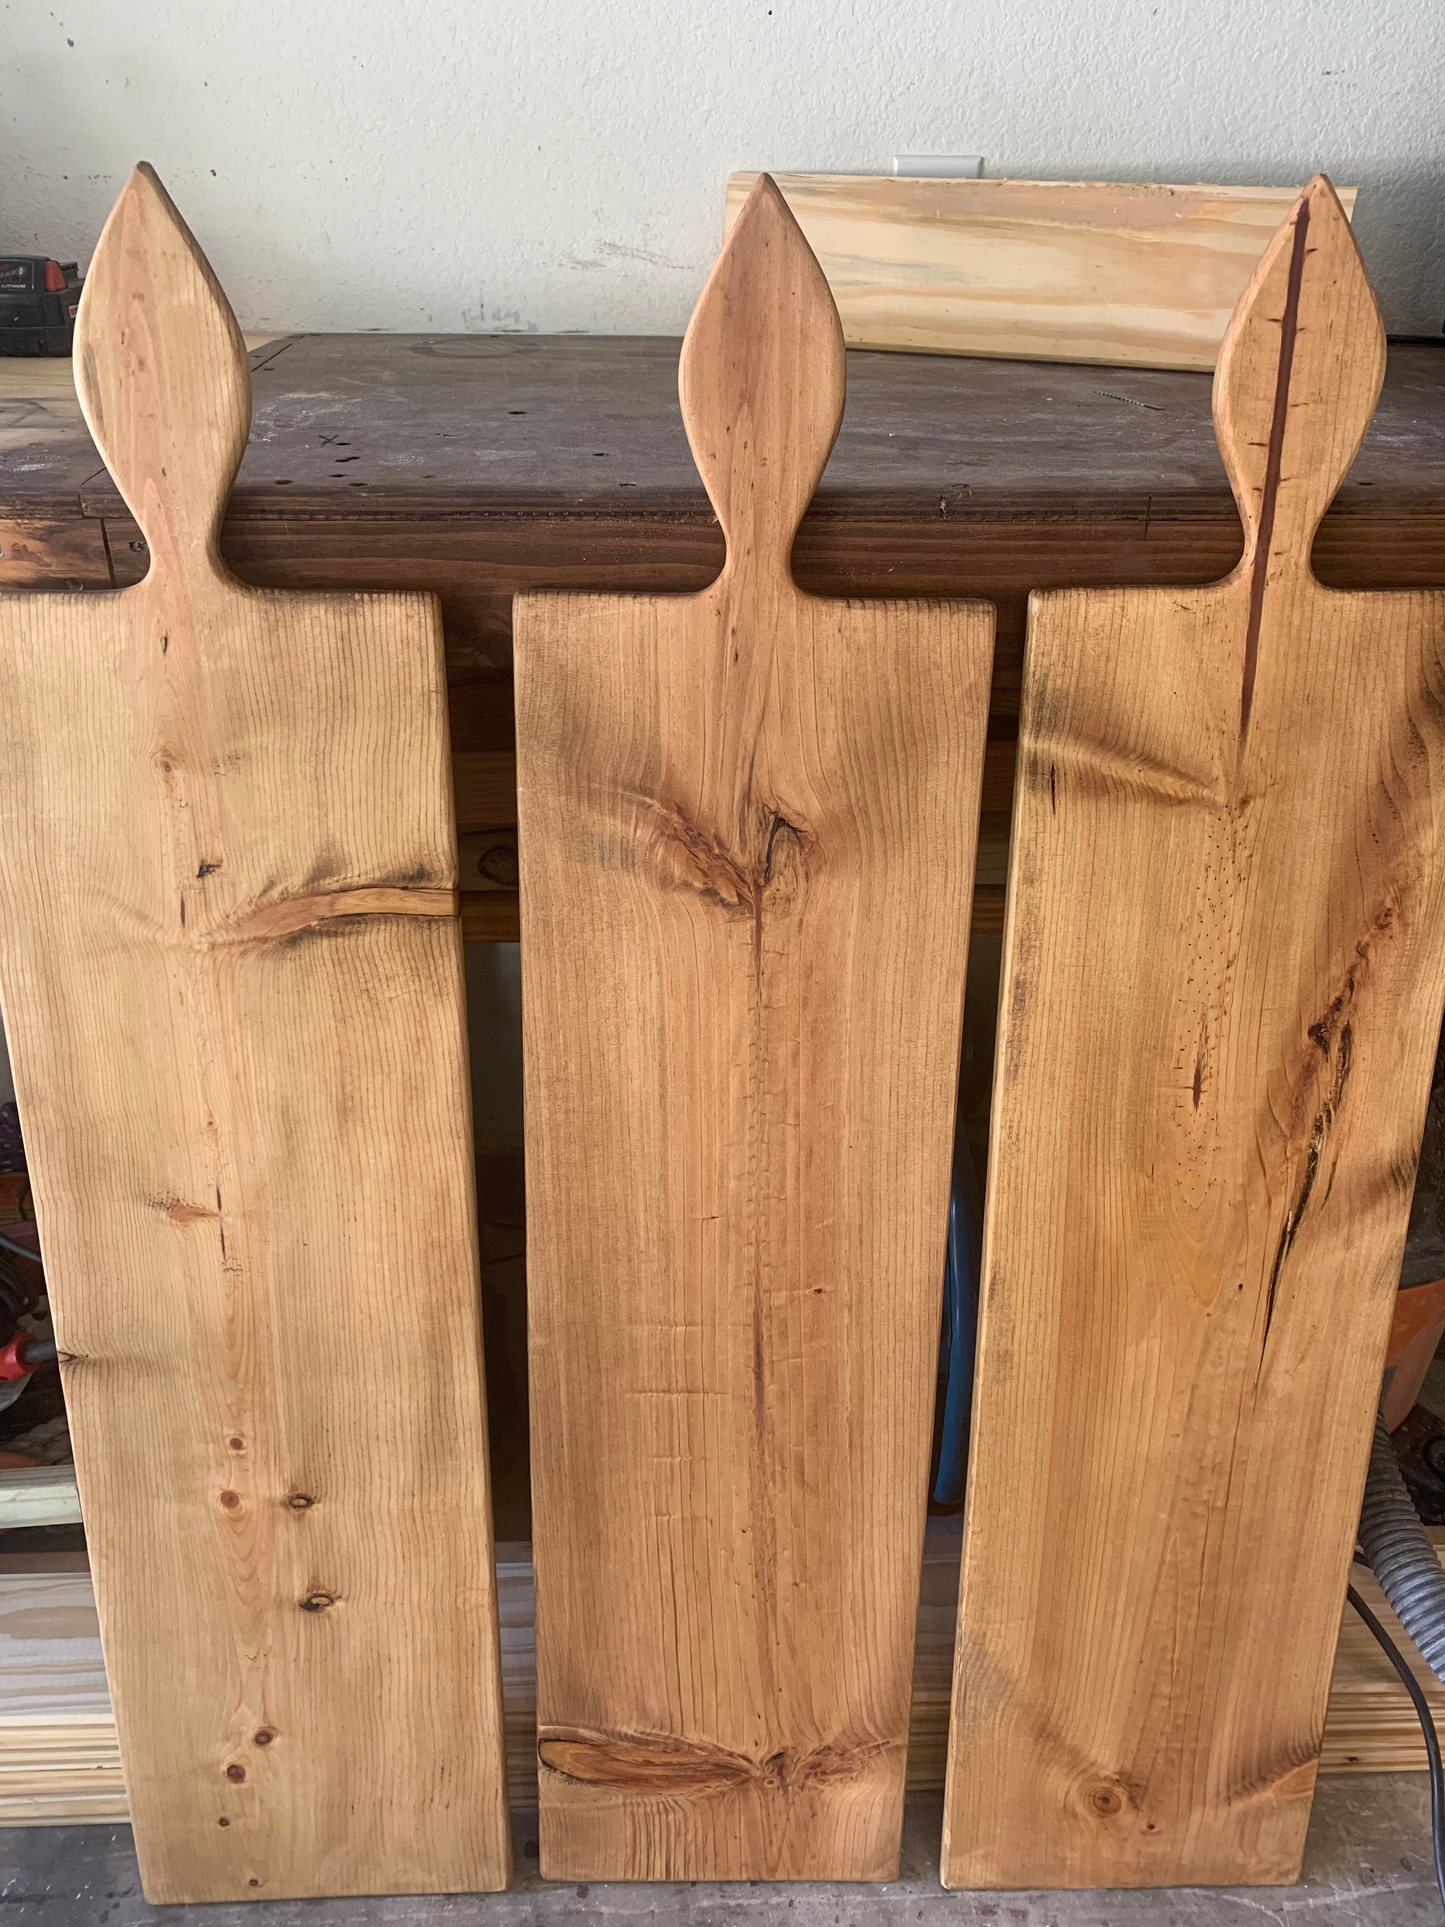 Oversized wooden serving board